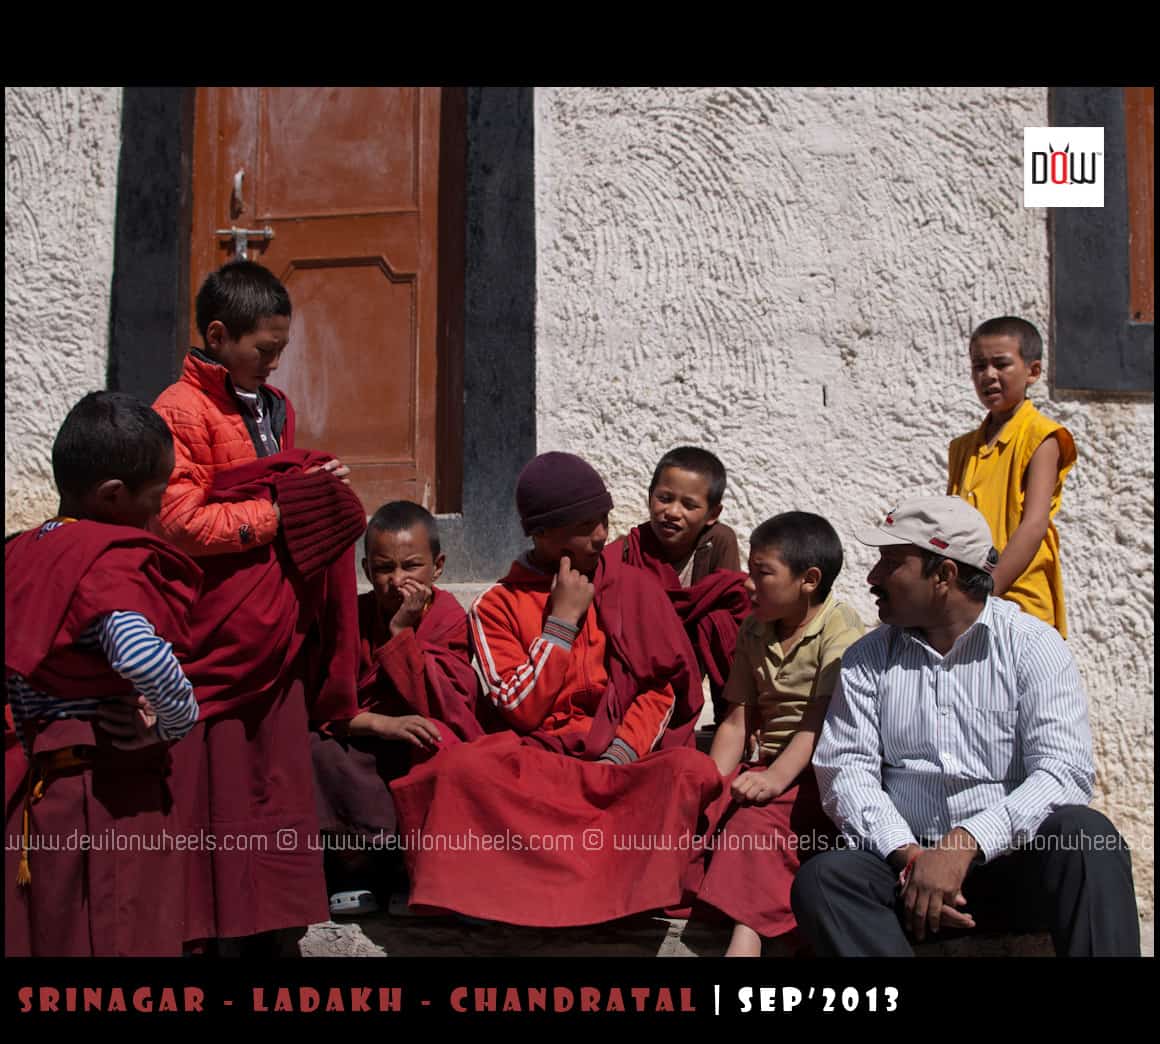 Jiwesh having candid time with Lama Kids at Lamayuru Monastery